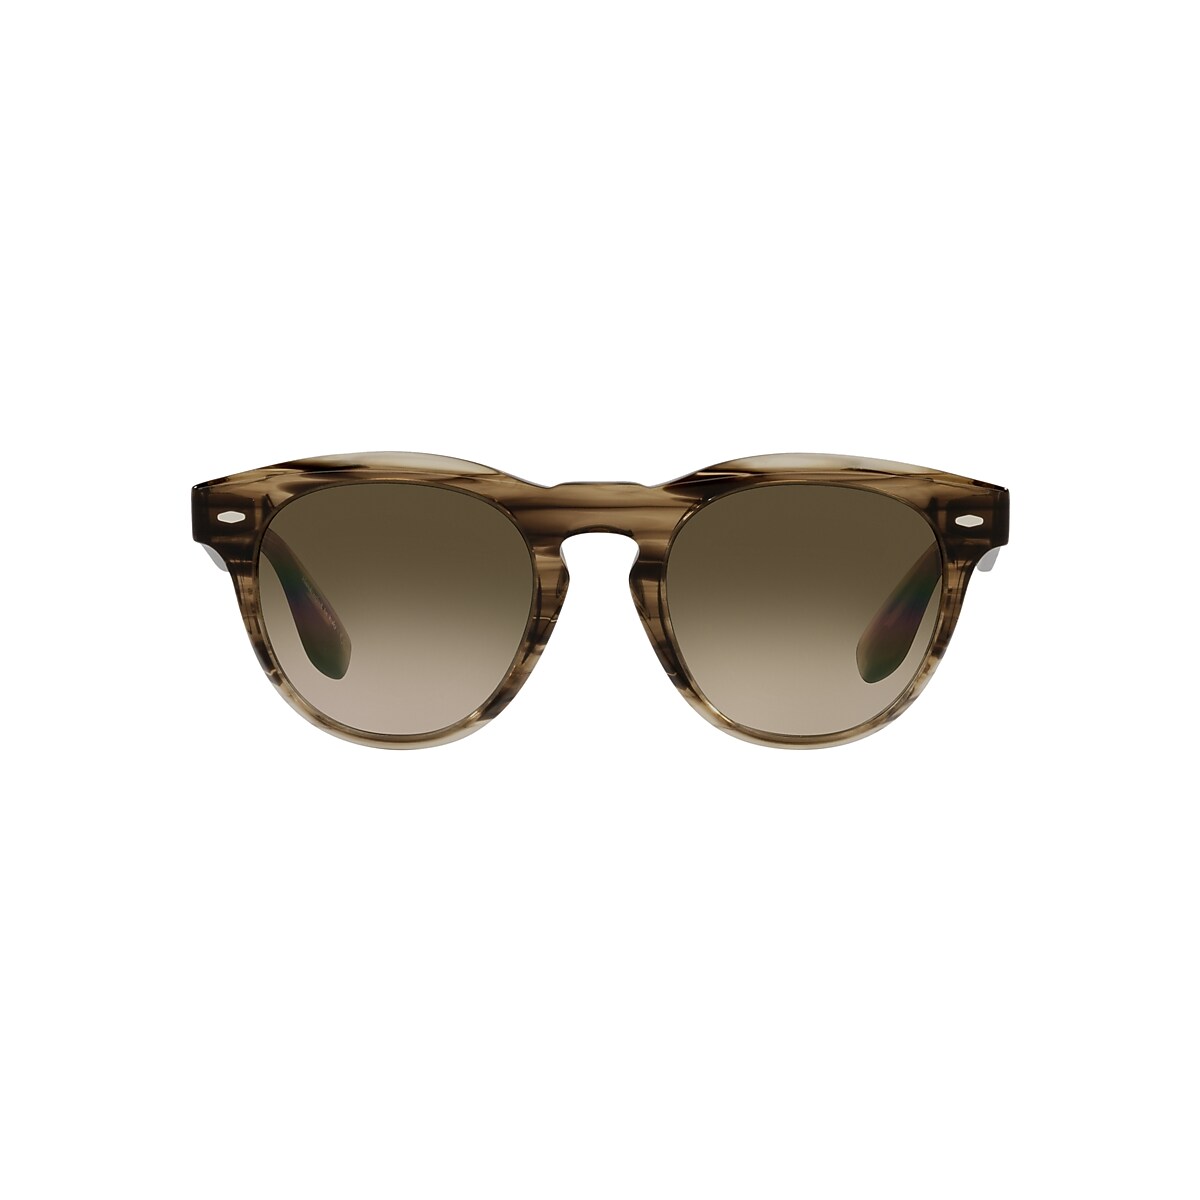 Sunglasses OV5473SU - Chrome Olive Photochromic - Oliver Peoples